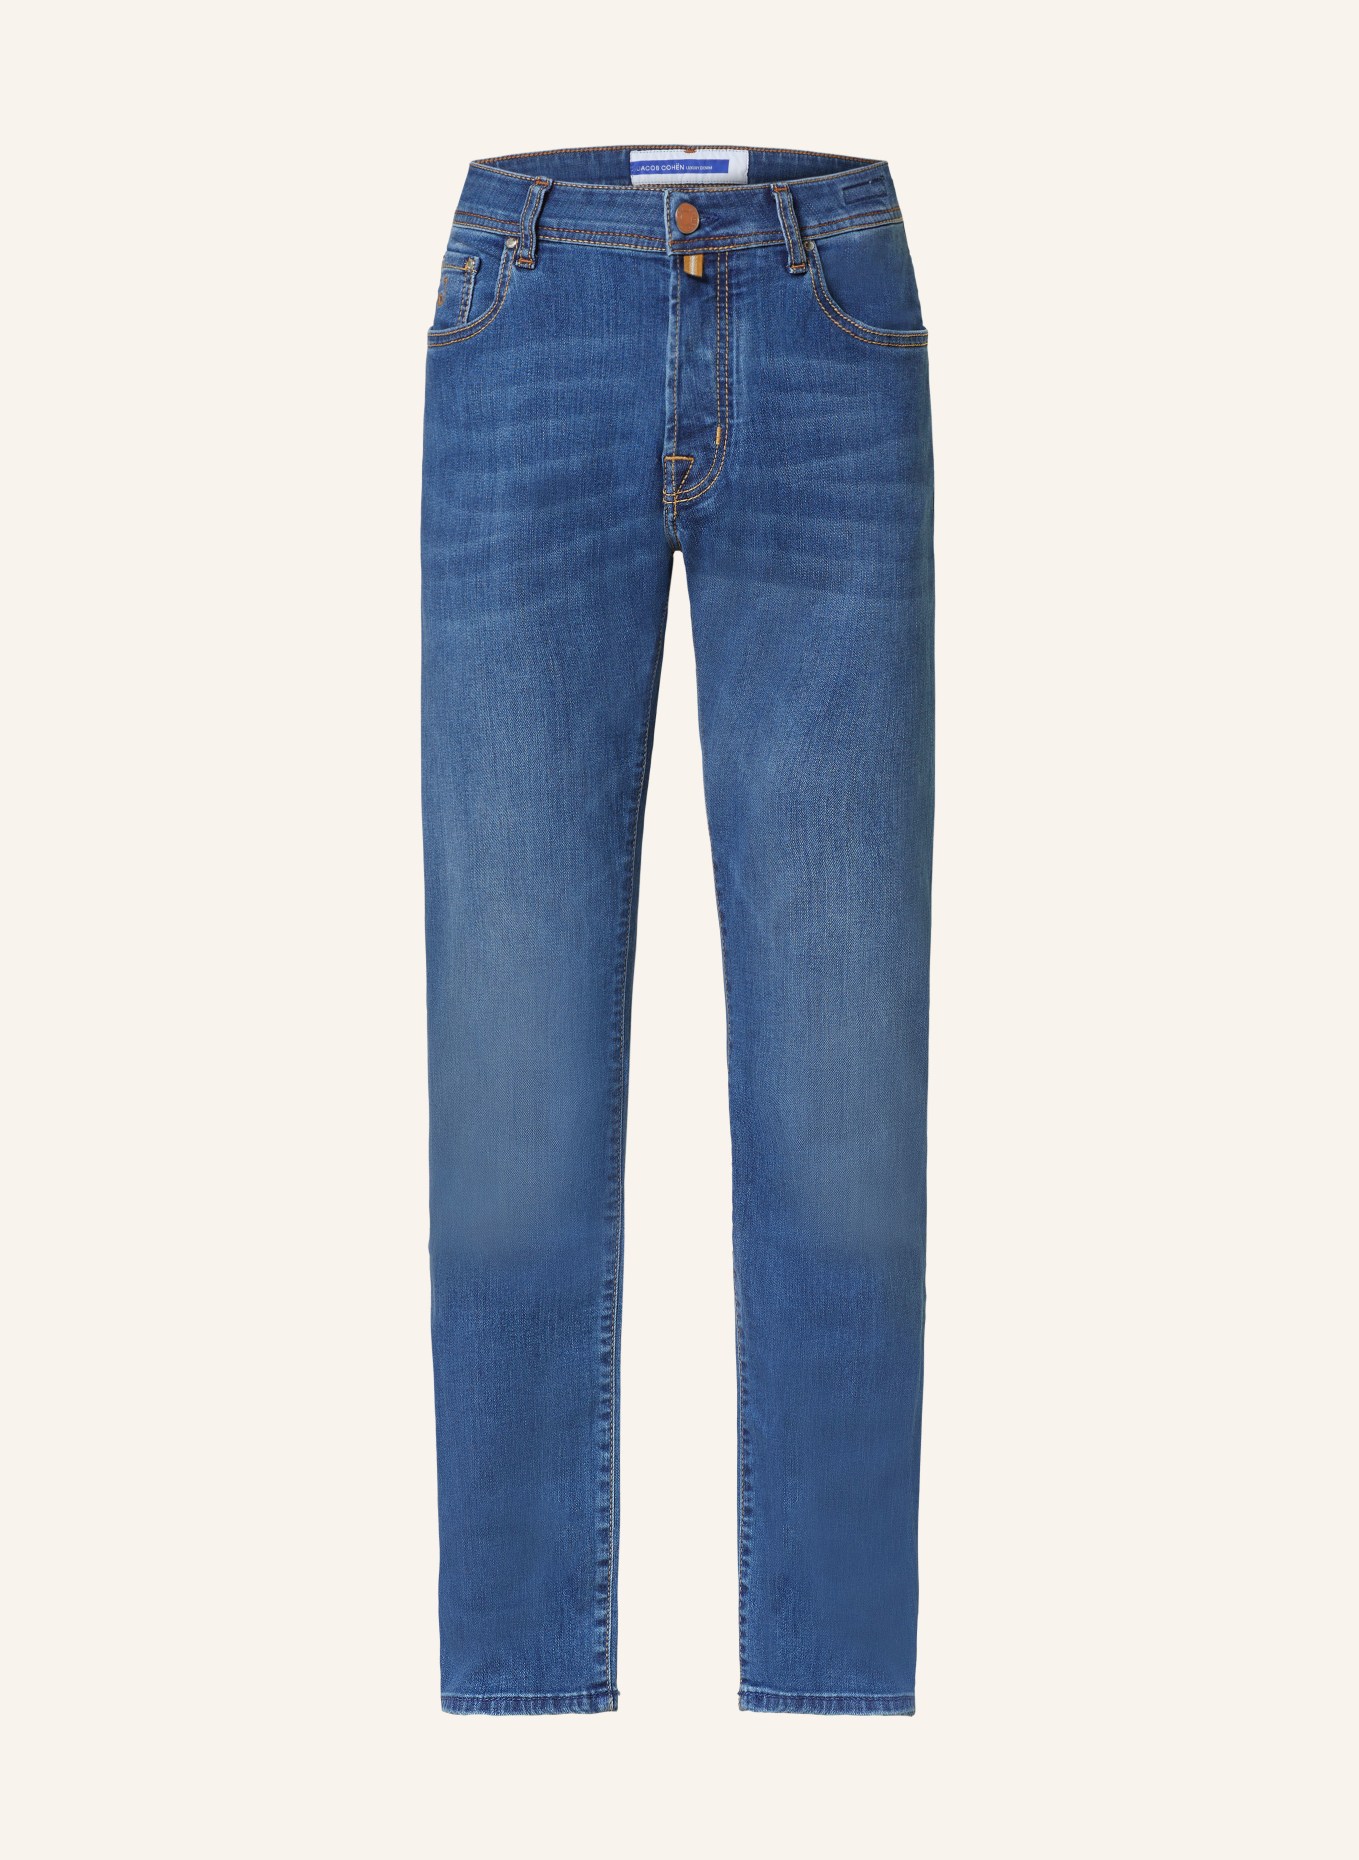 JACOB COHEN Jeans BARD Slim Fit, Farbe: 716D Mid Blue (Bild 1)